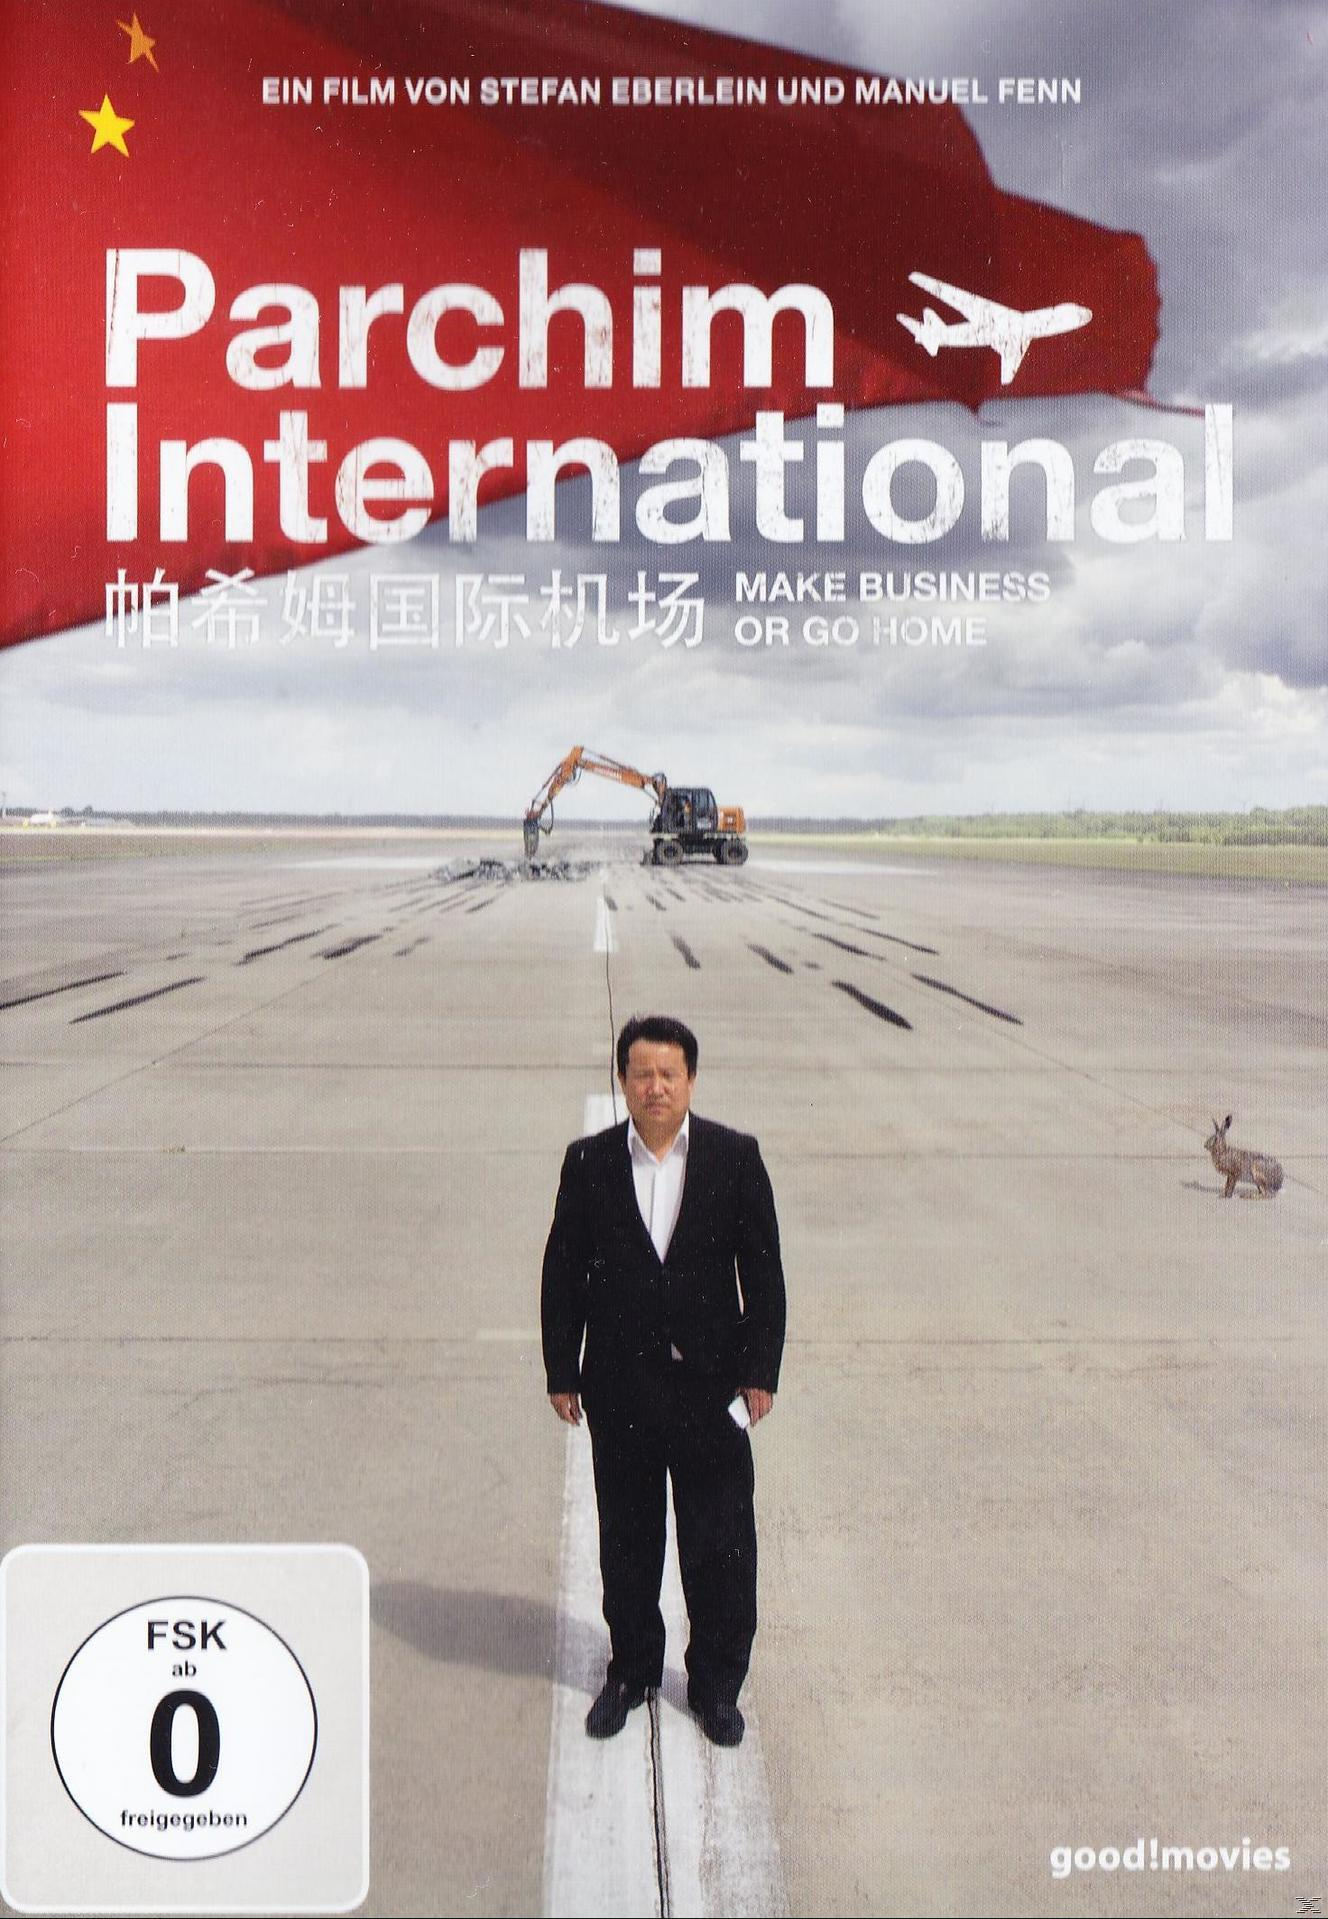 Parchim International DVD